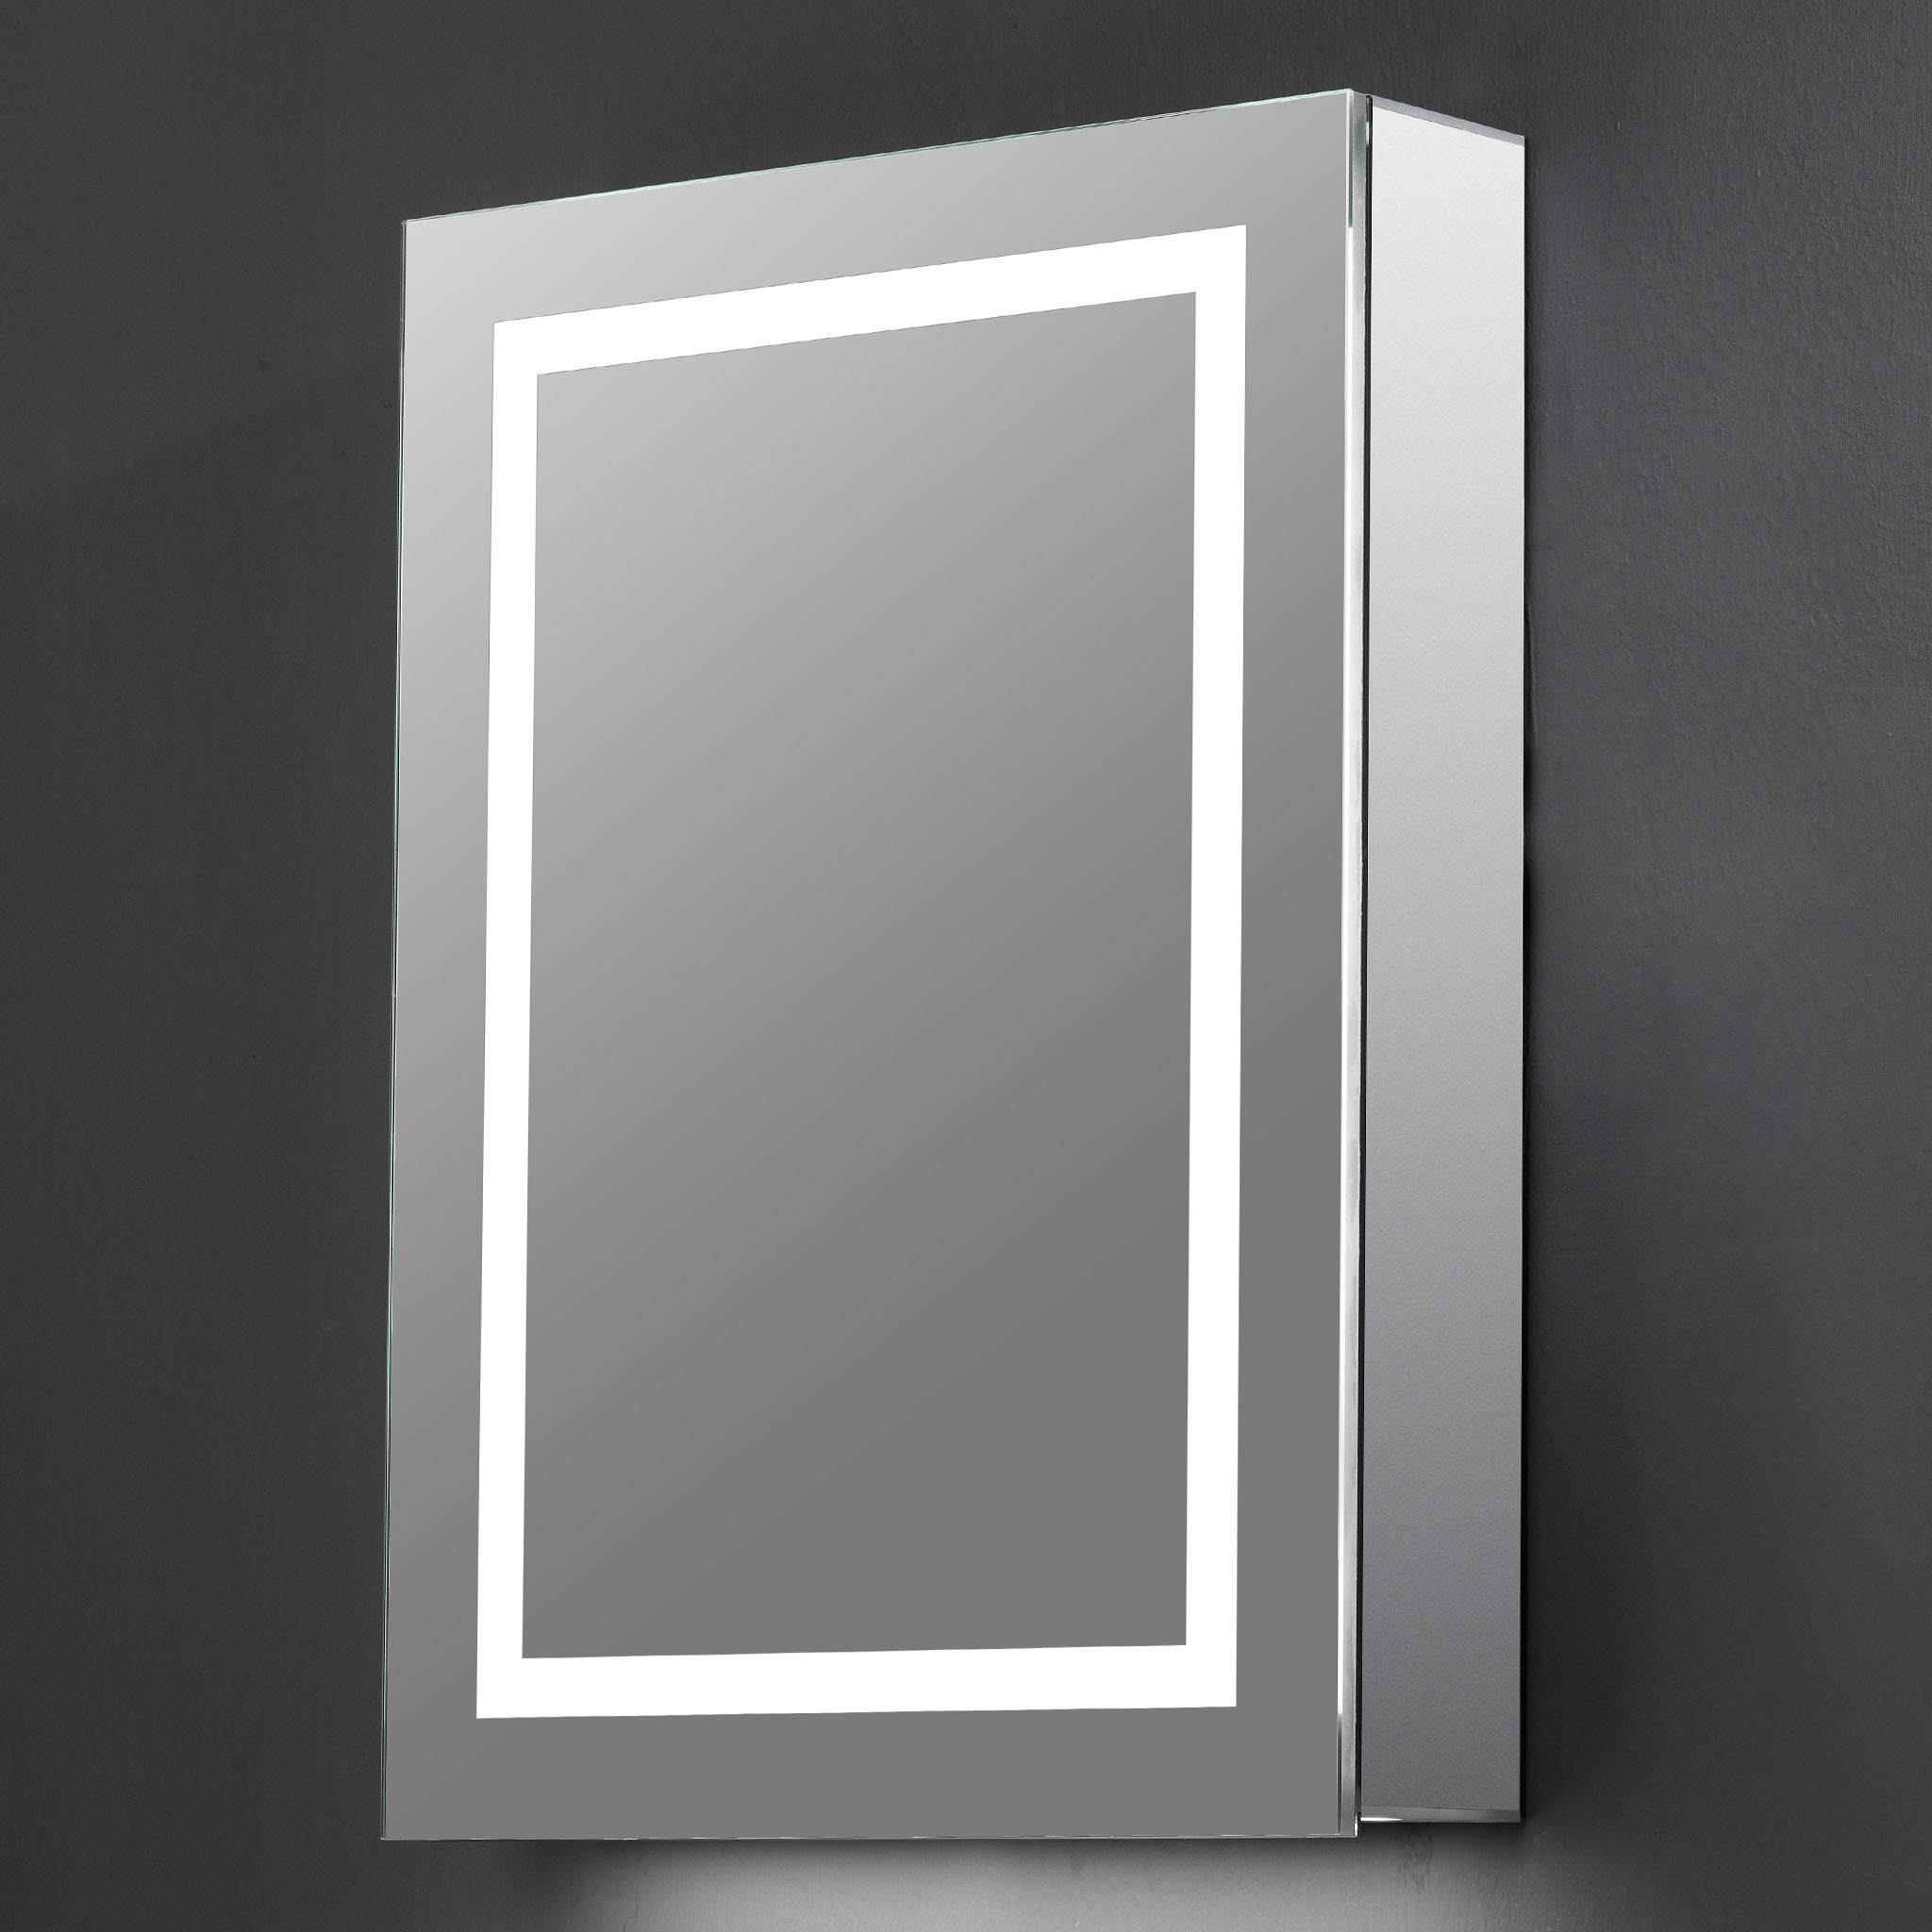 Union Phase 50 LED Mirror Cabinet 500 x 700mm